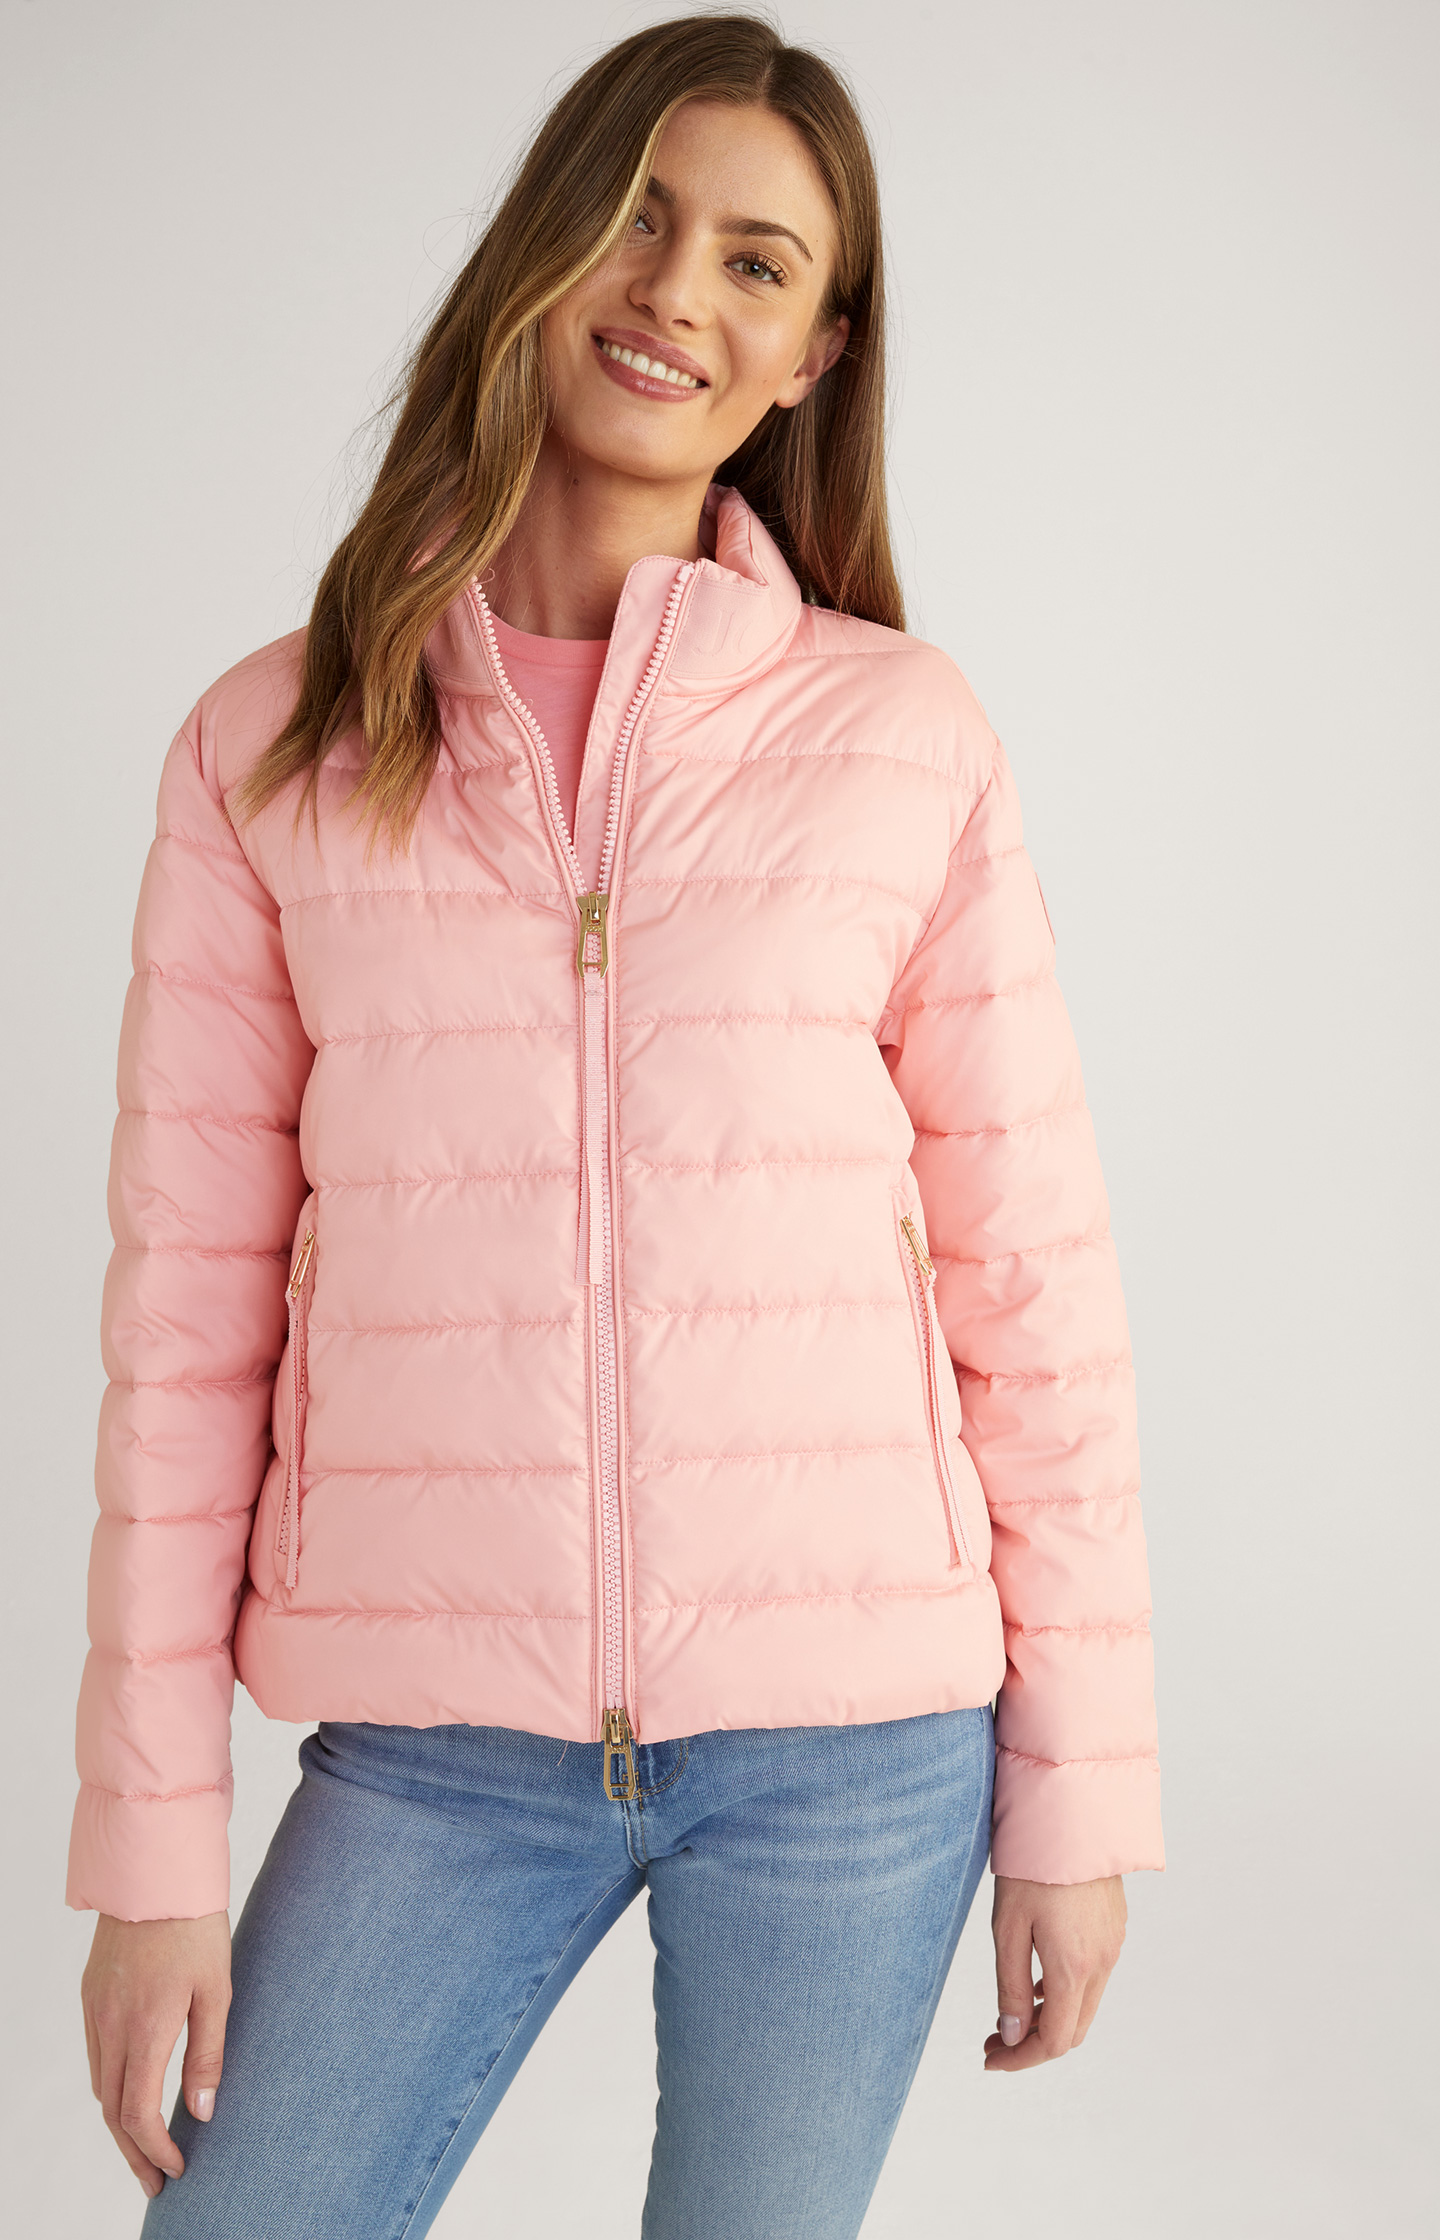 Quilted Jacket in Pink - in the JOOP! Online Shop